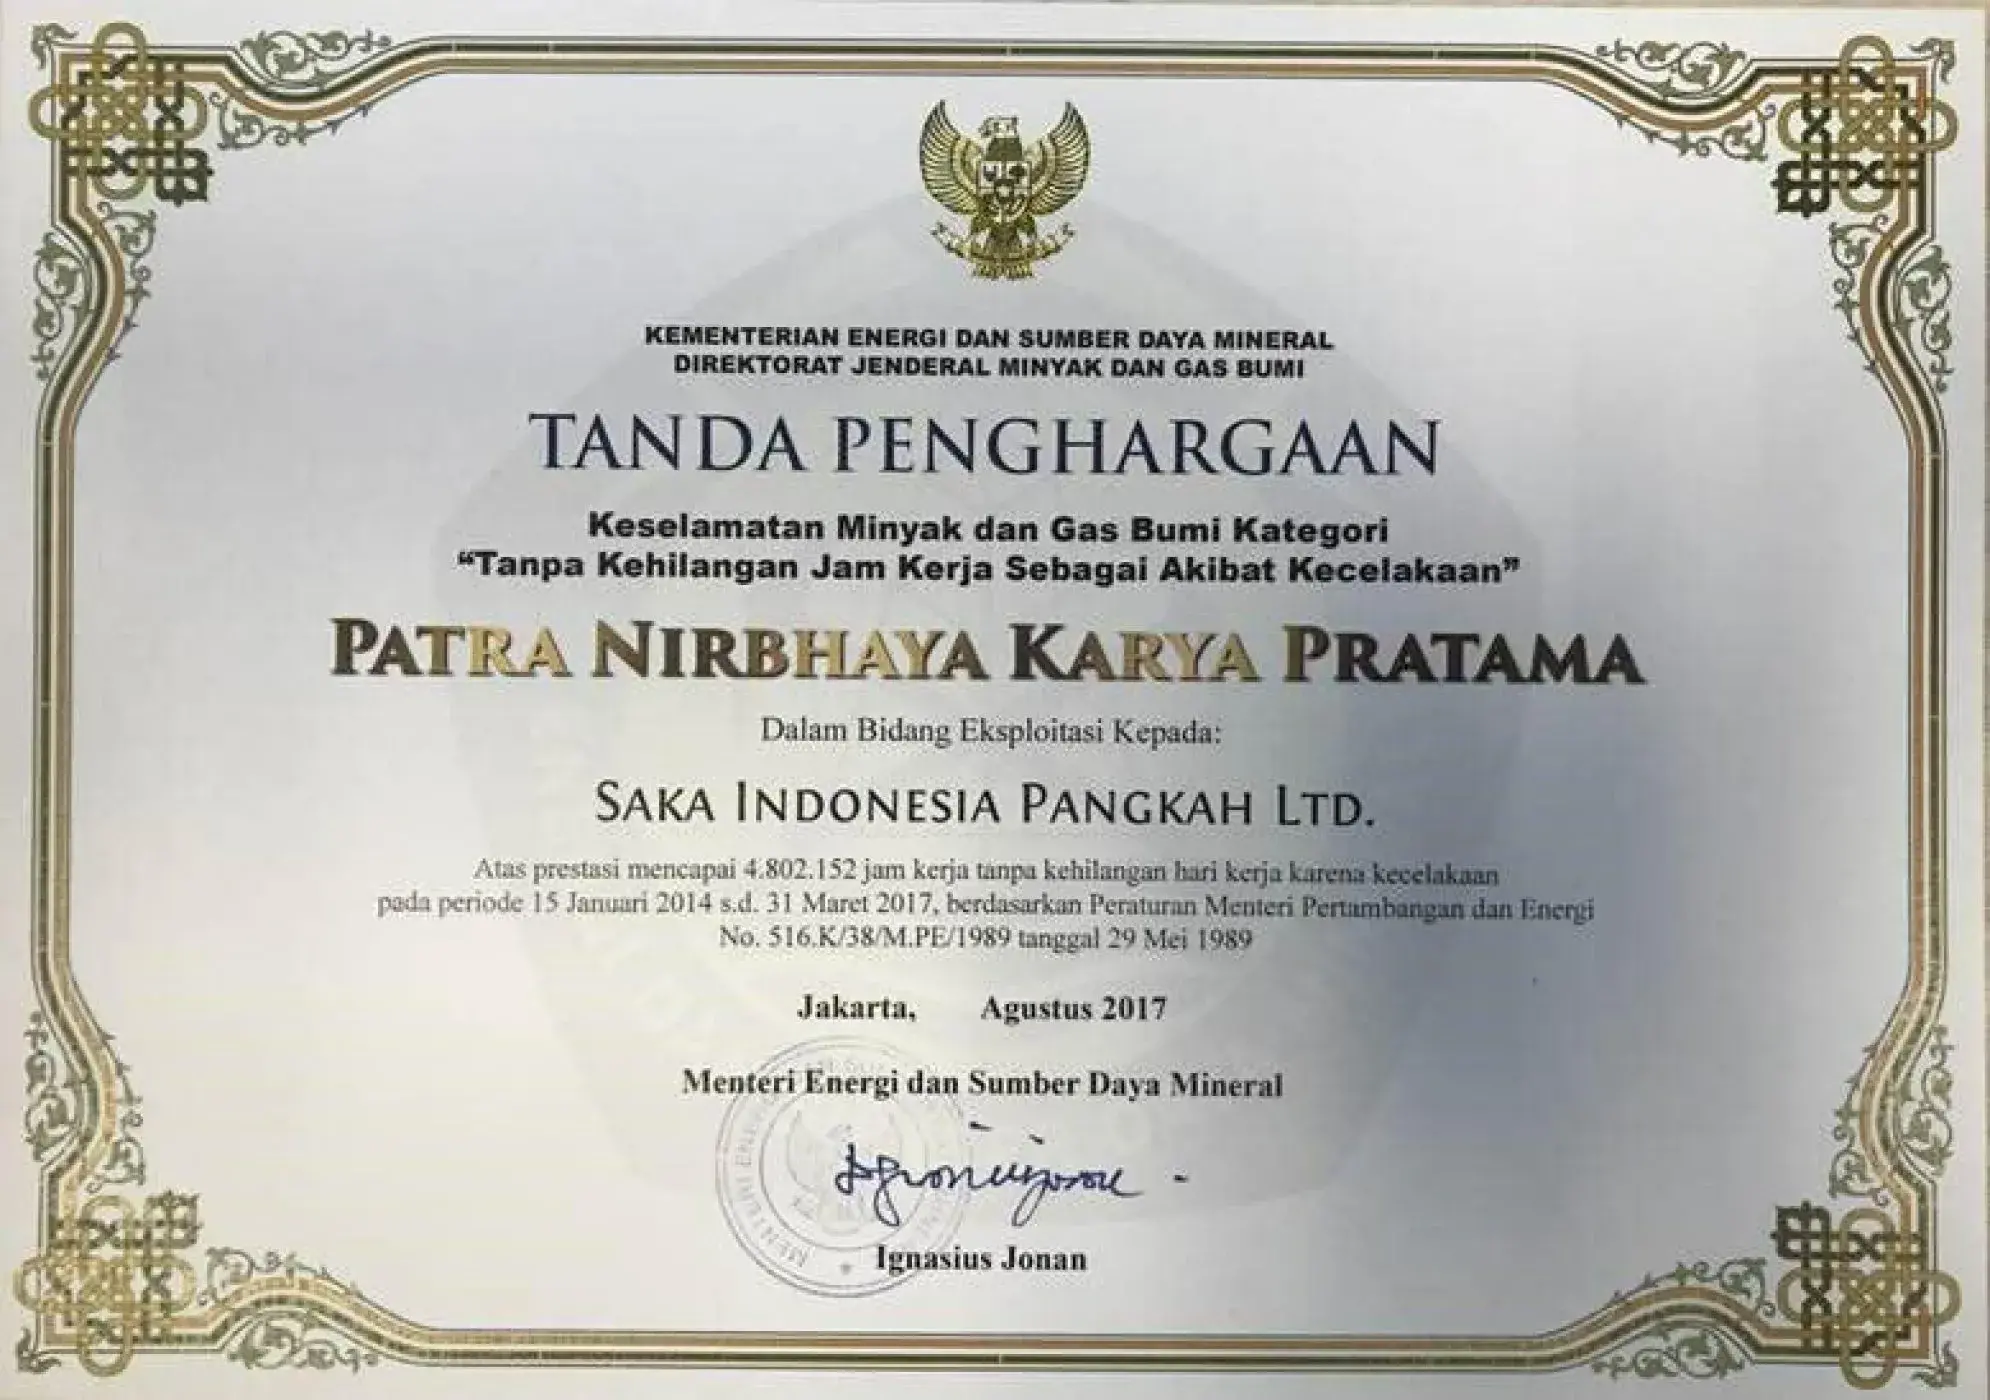 Second Patra Nirbhaya Karya Pratama Award for SAKA